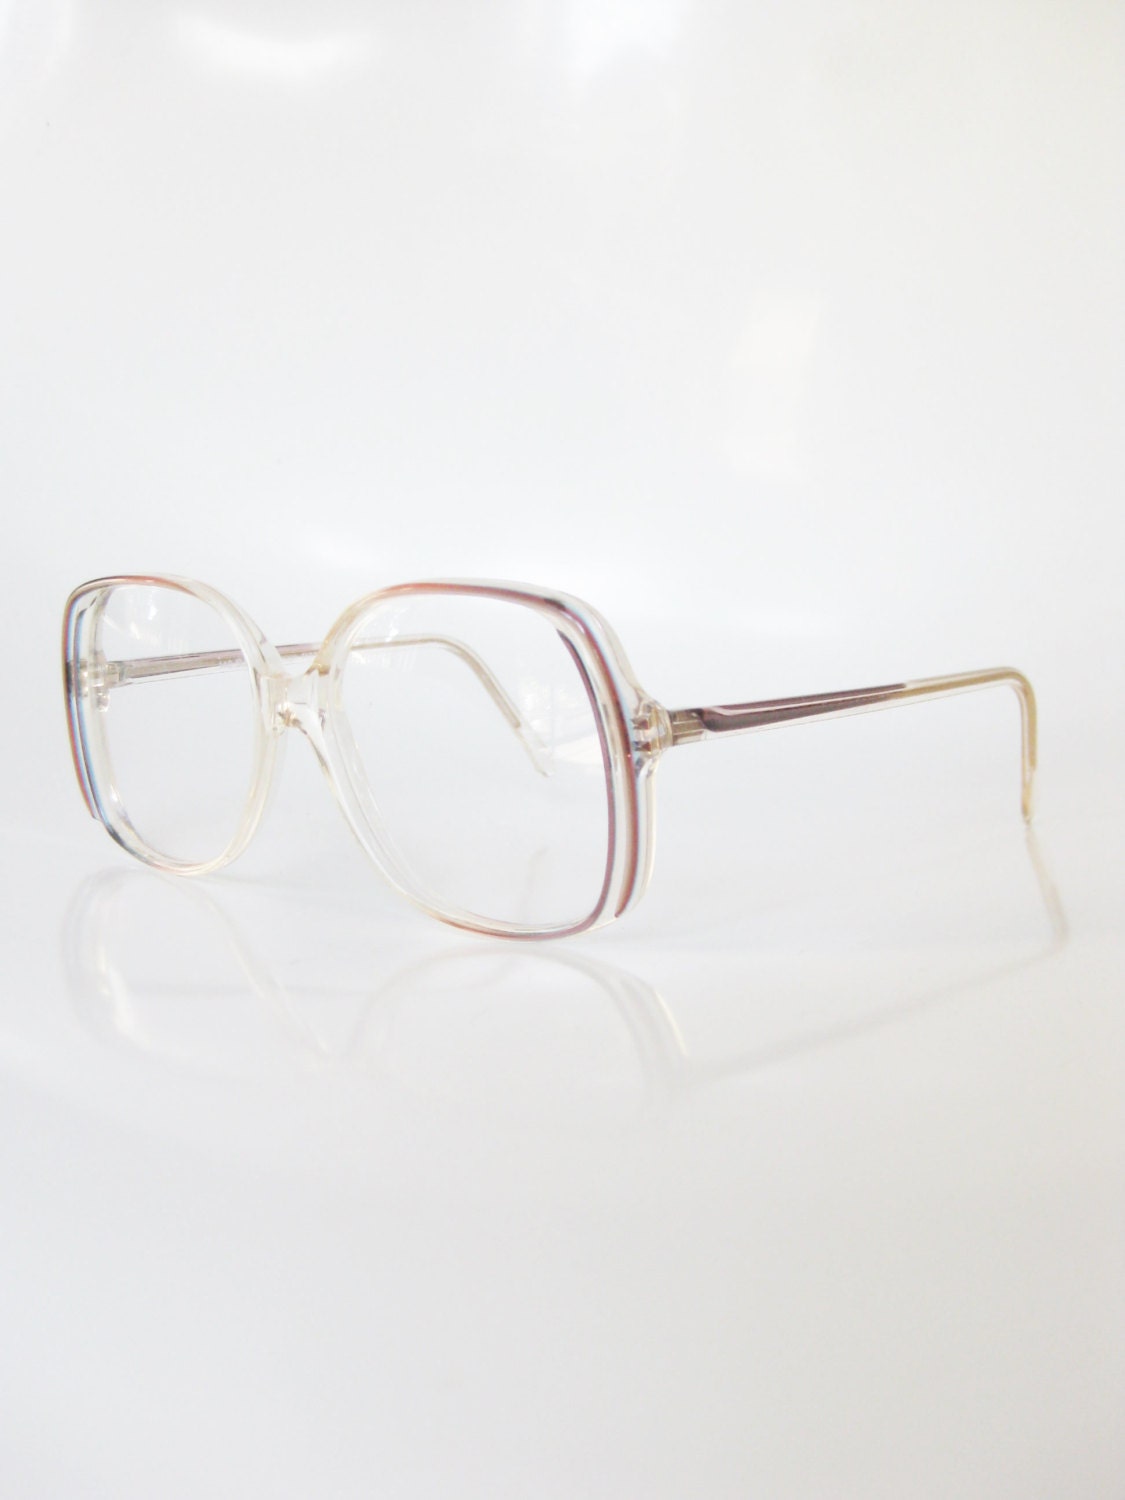 1970s Vintage French Eyeglasses Rust Red Glasses by OliverandAlexa